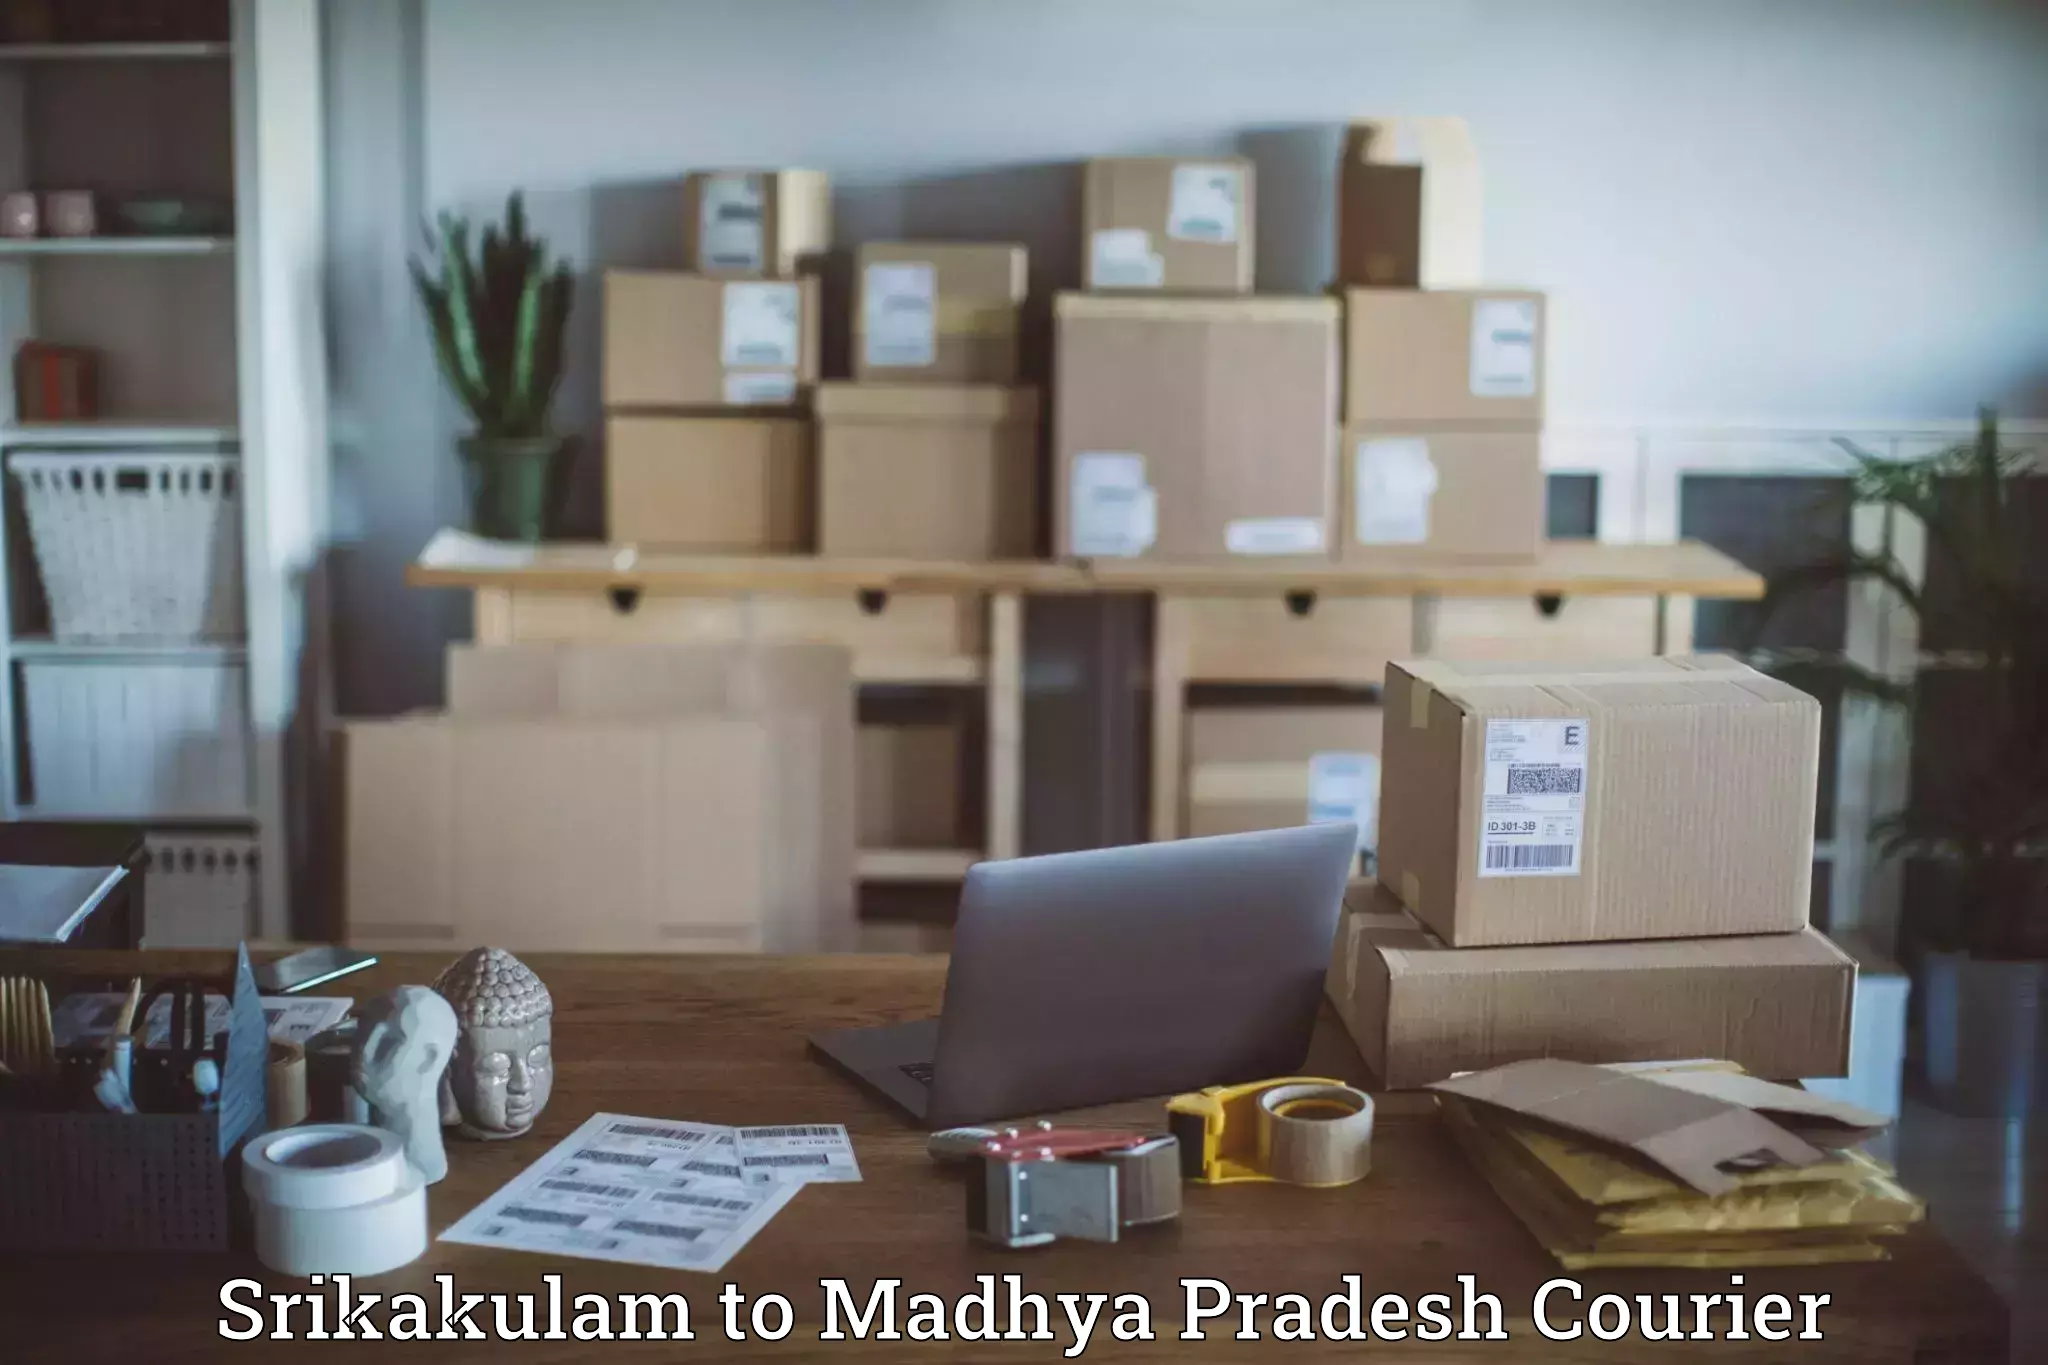 Courier service innovation Srikakulam to Chanderi